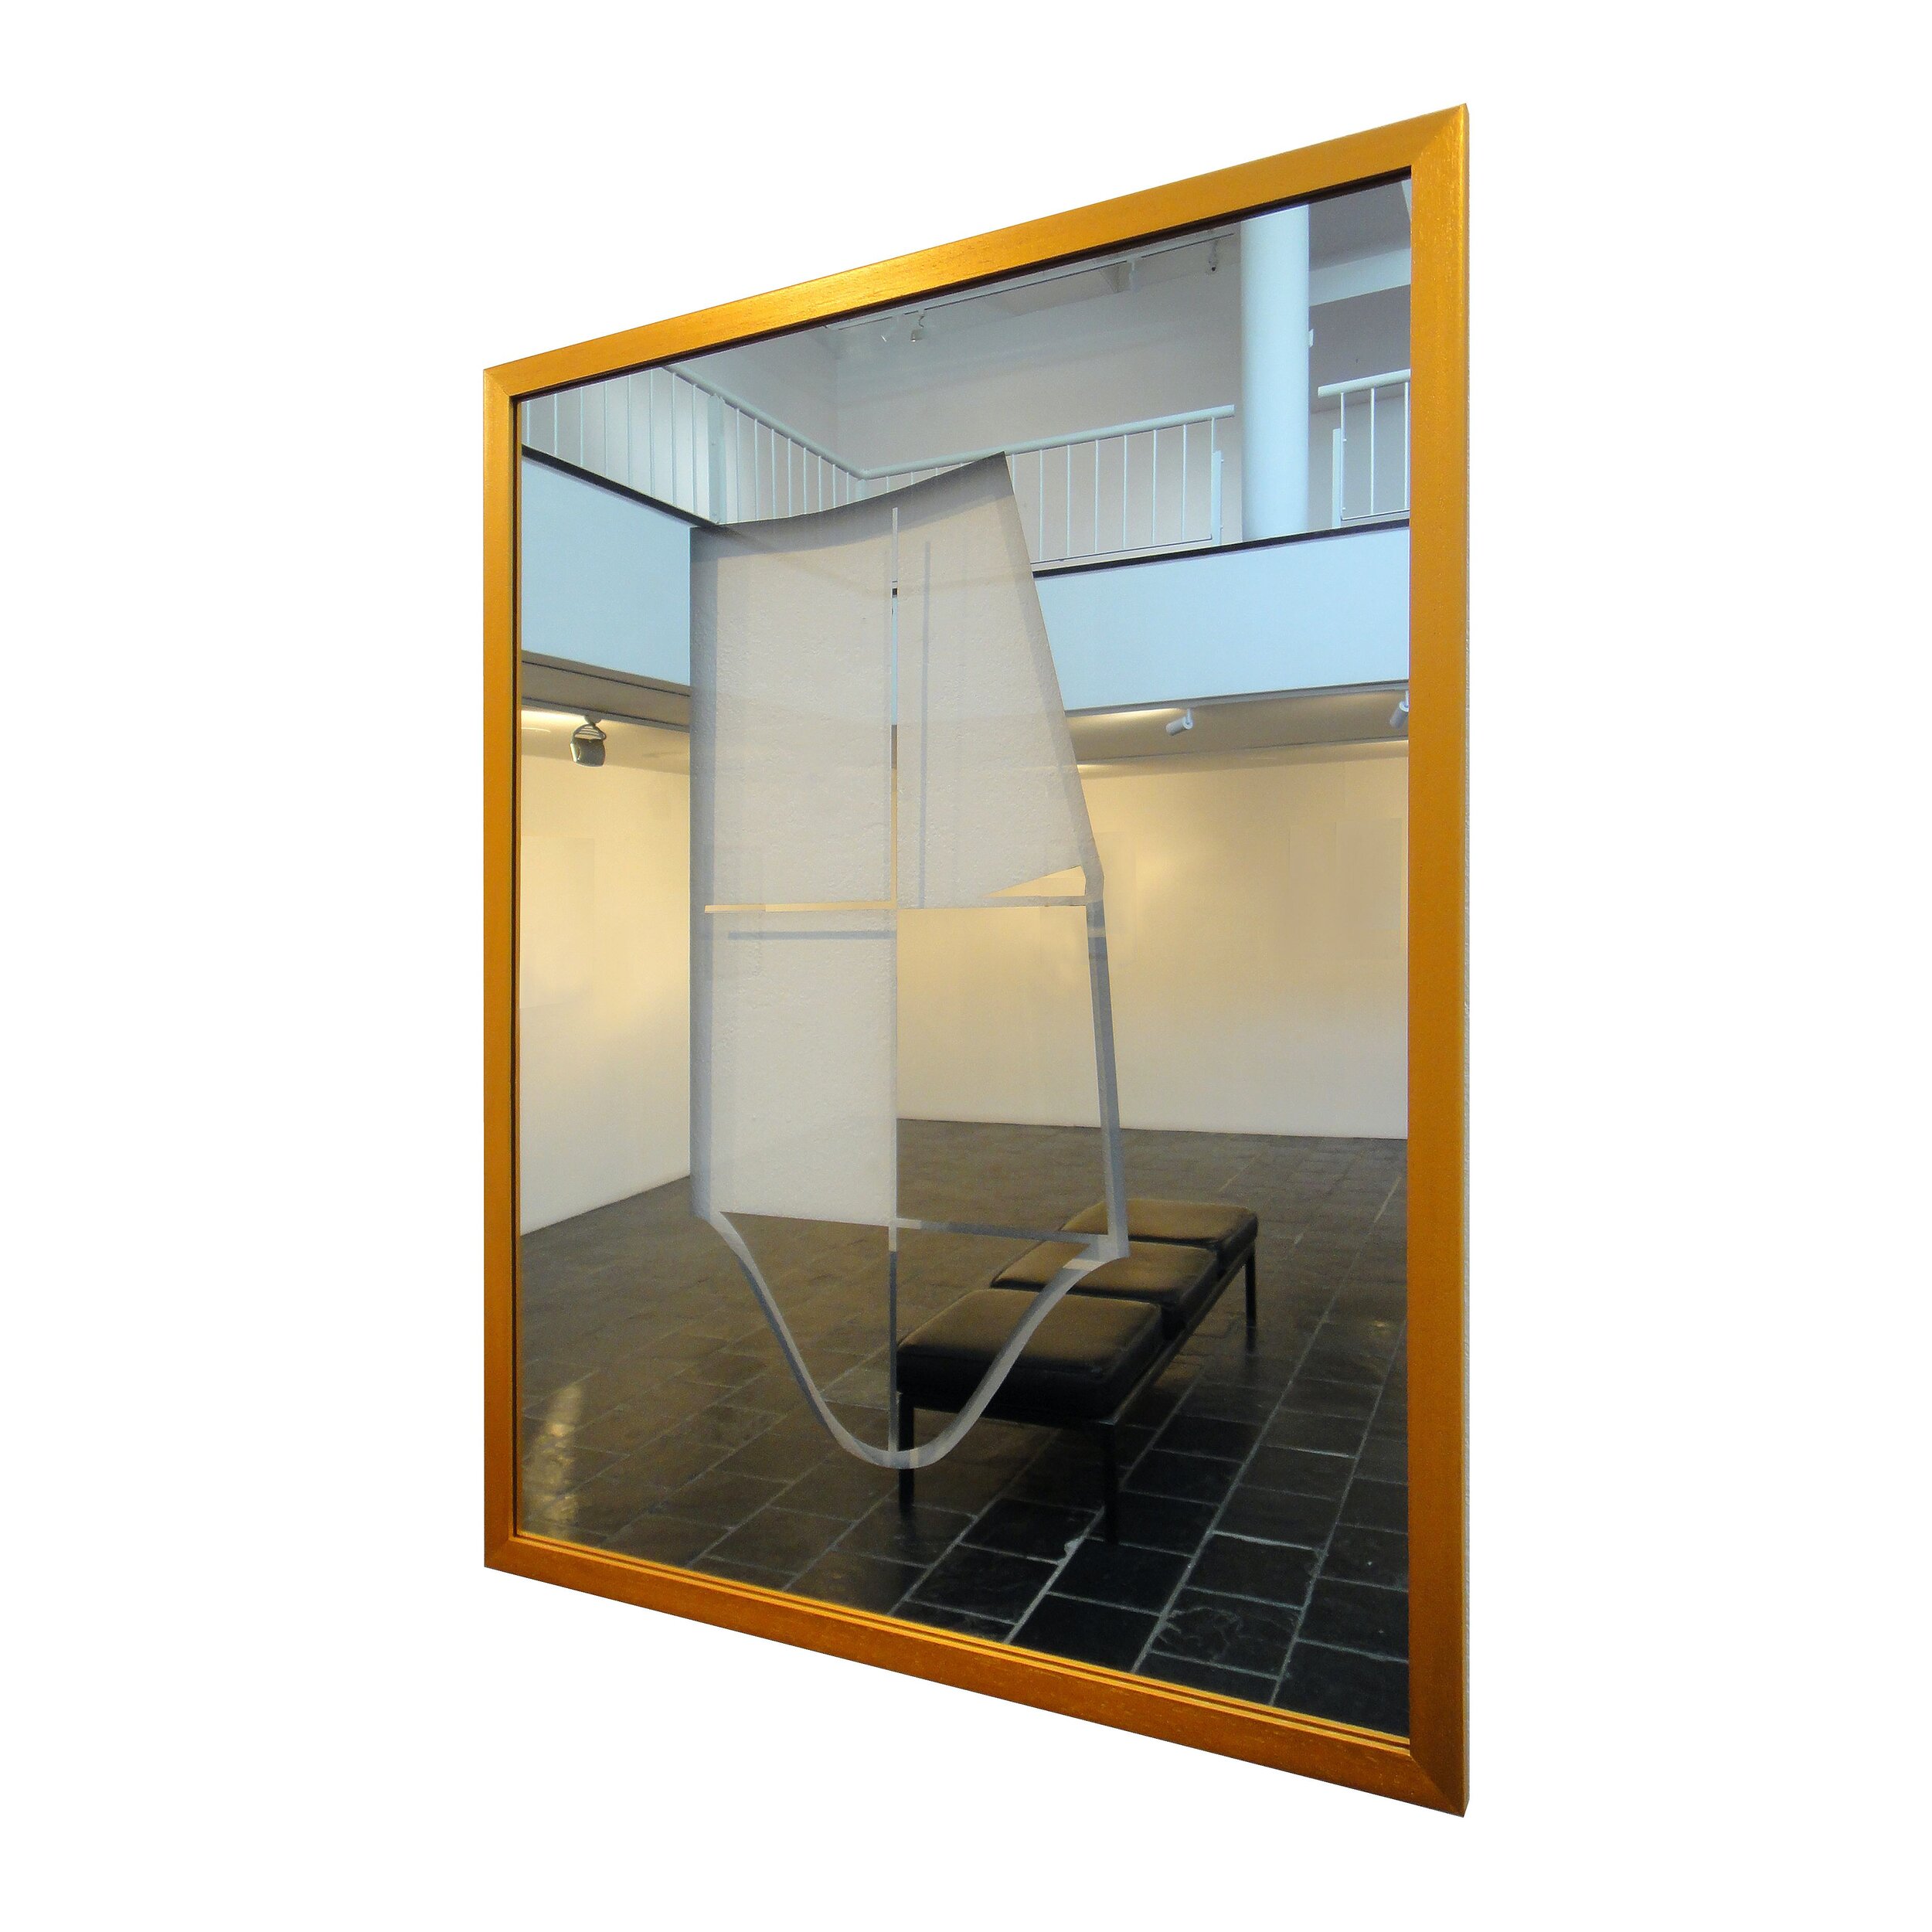  Tangeni Kambudu   Nostalgic Human Structure 3   Glass/Mirror, 2020  84 x 64 x  cm   